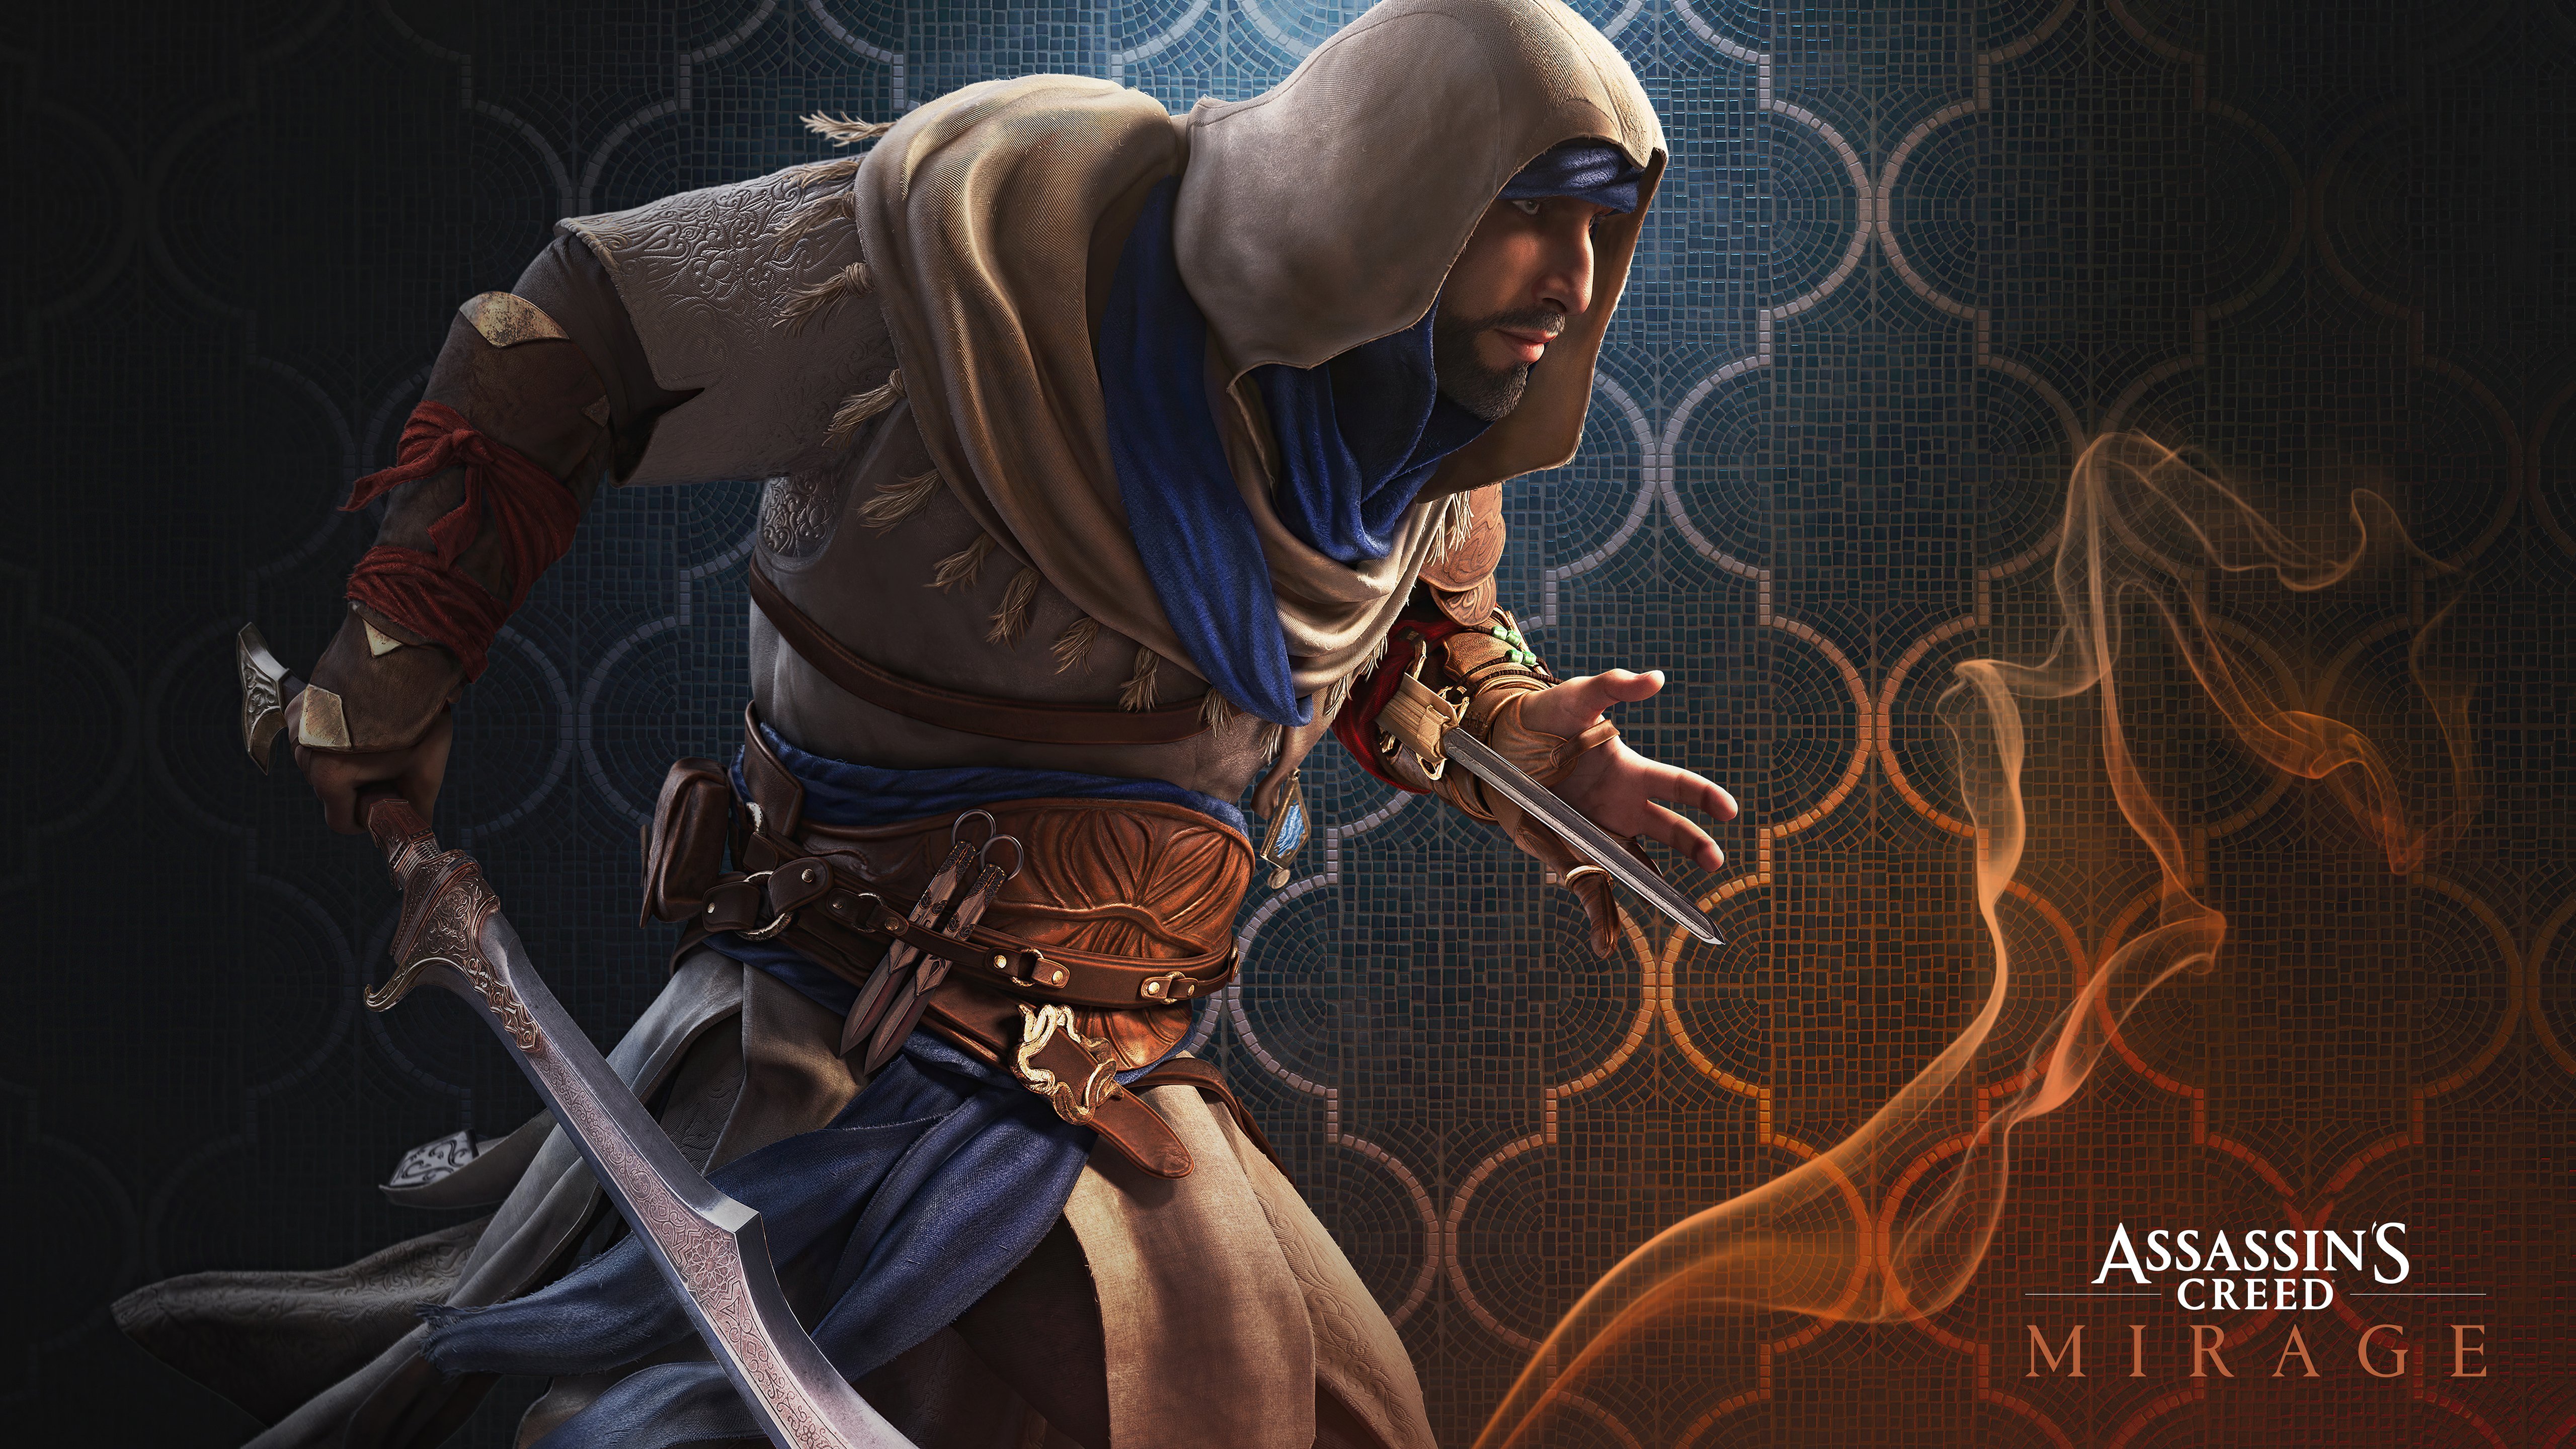 Character Assassins Creed Mirage Wallpaper 5k Ultra HD ID:11029